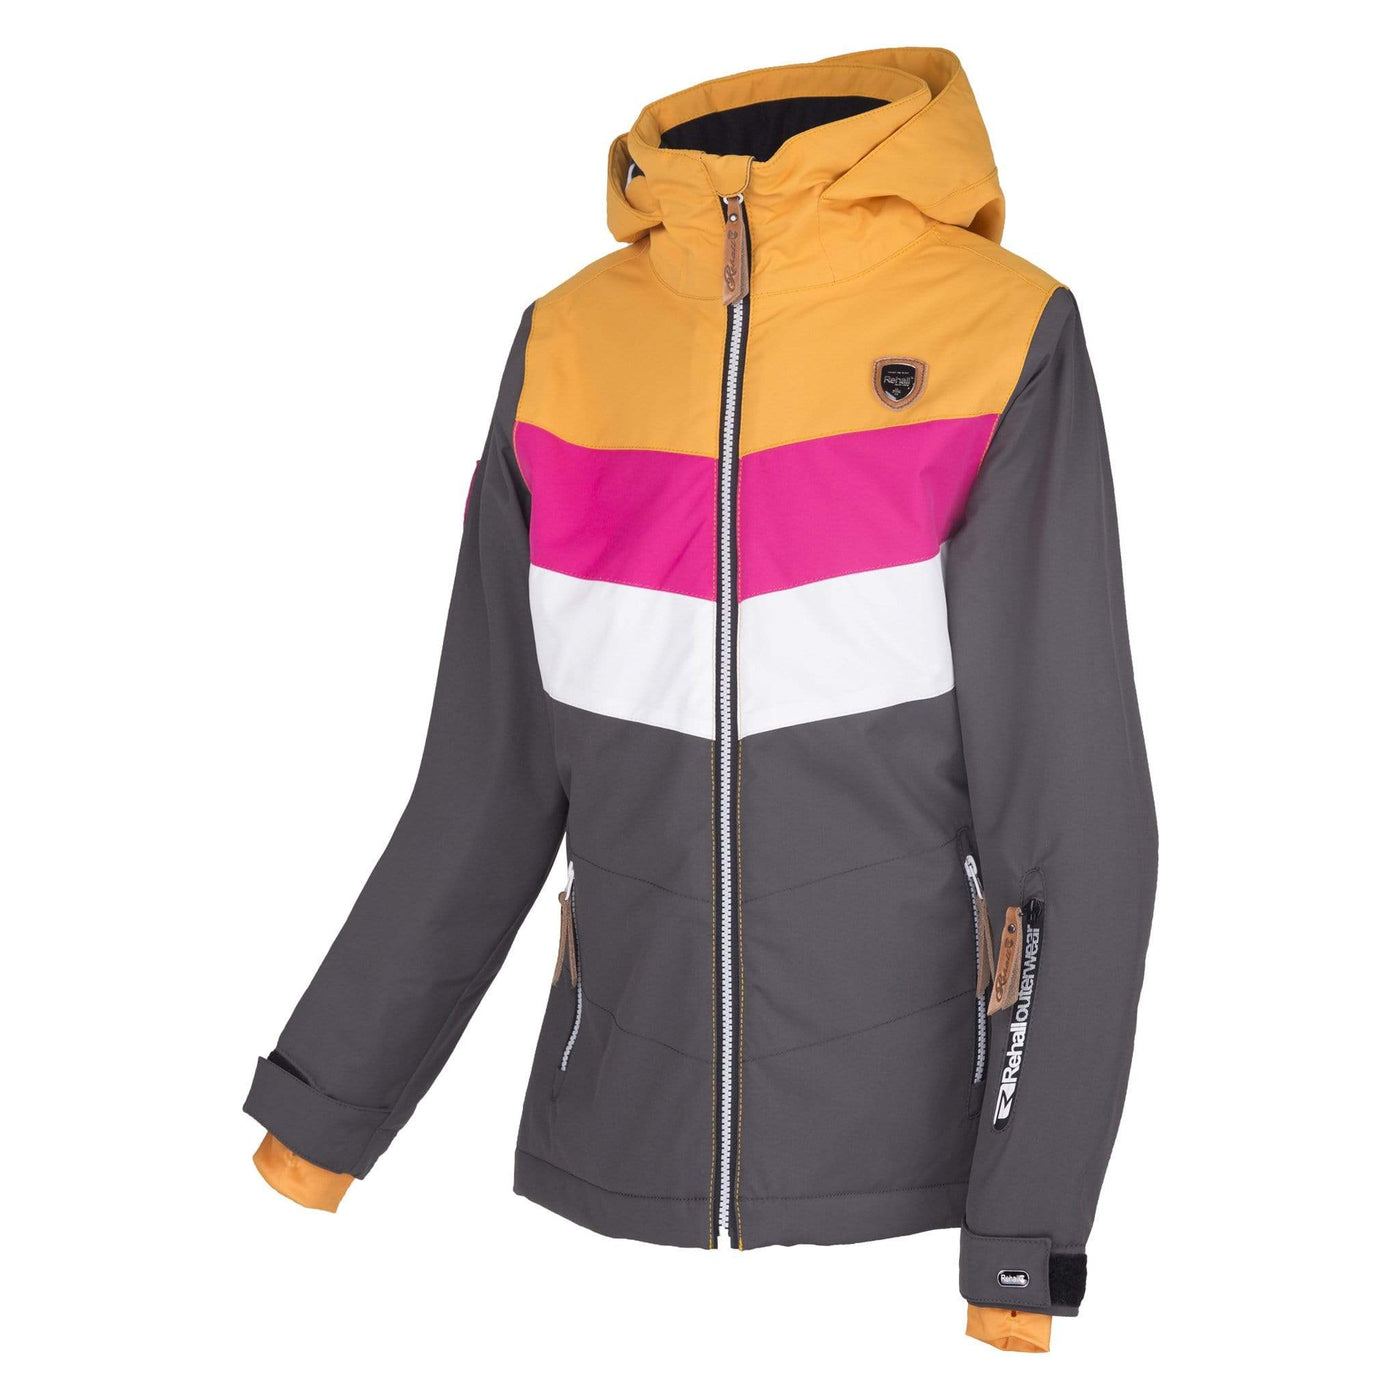 SnowKids Outerwear Jacket 116 Rehall Hester Jr Girls Snow Jacket - Graphite